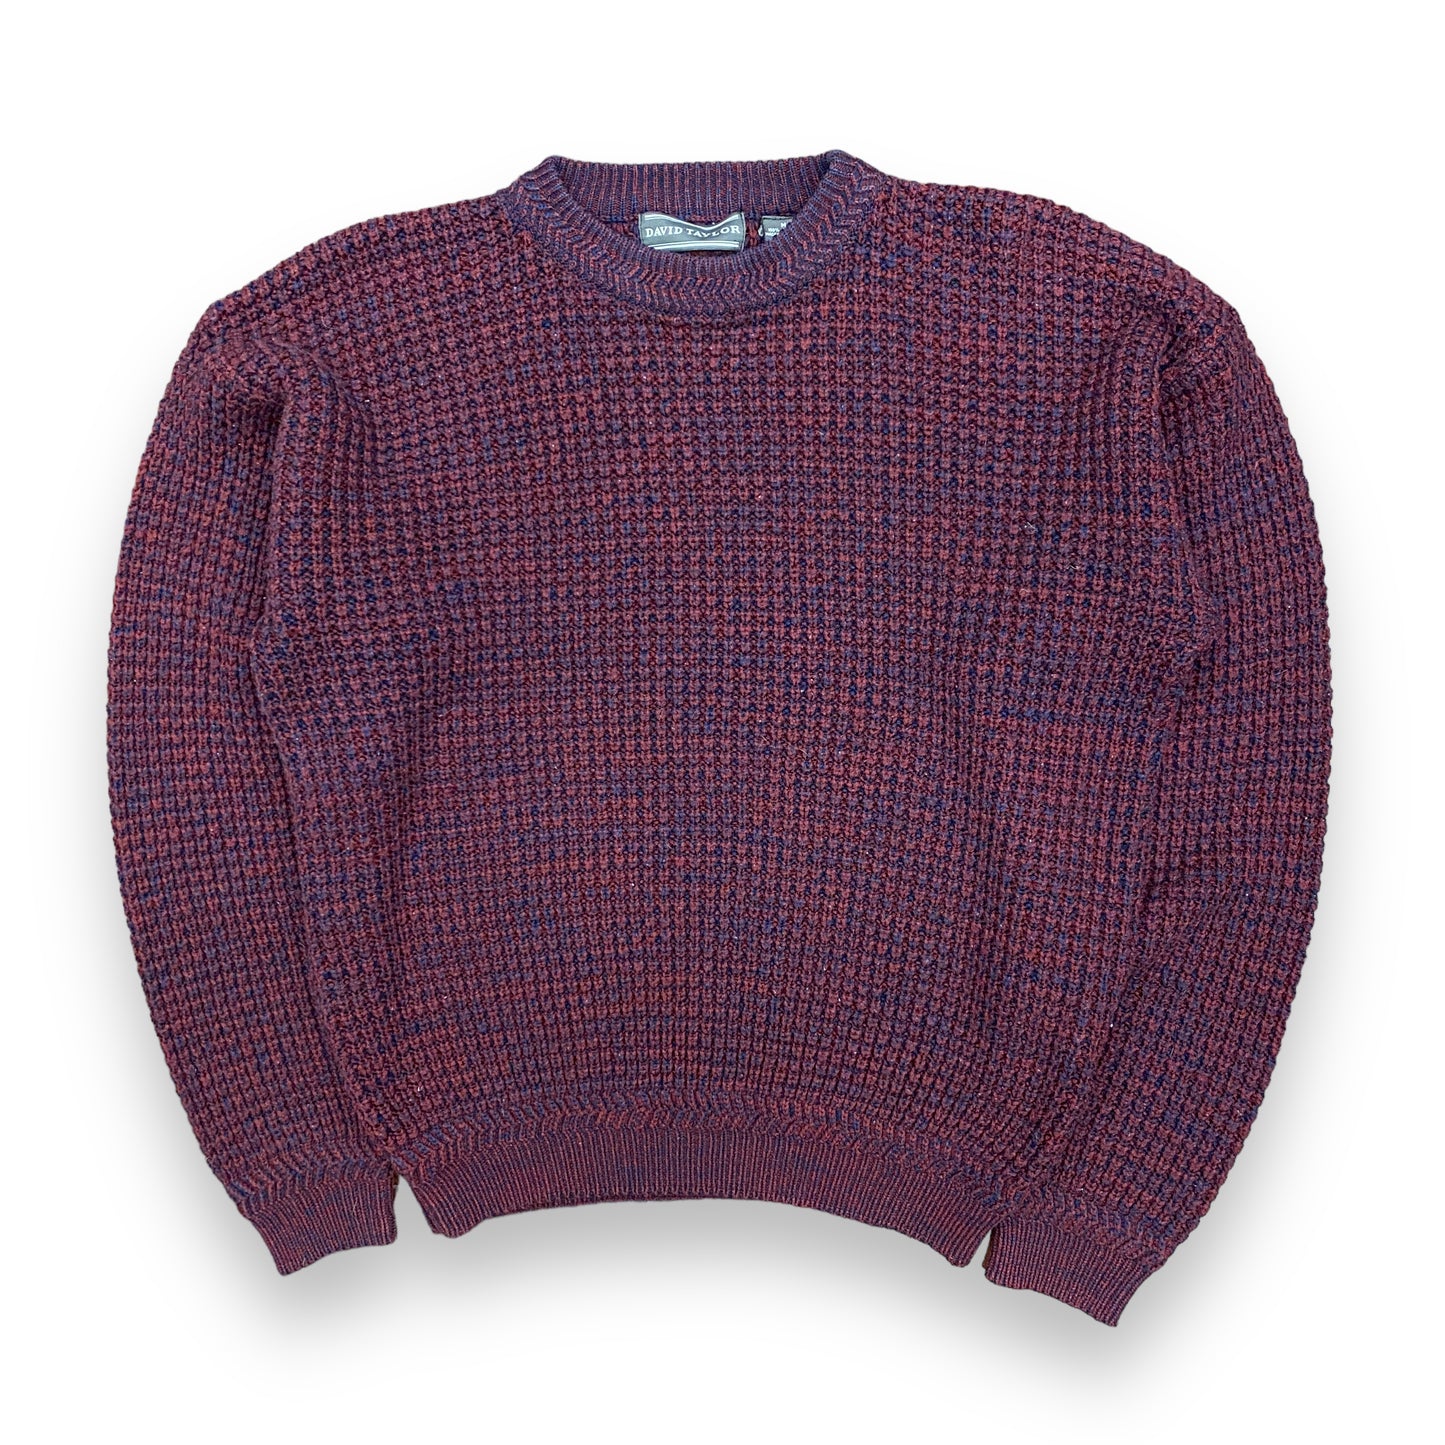 Vintage David Taylor Red & Navy Knit Sweater - Size Medium